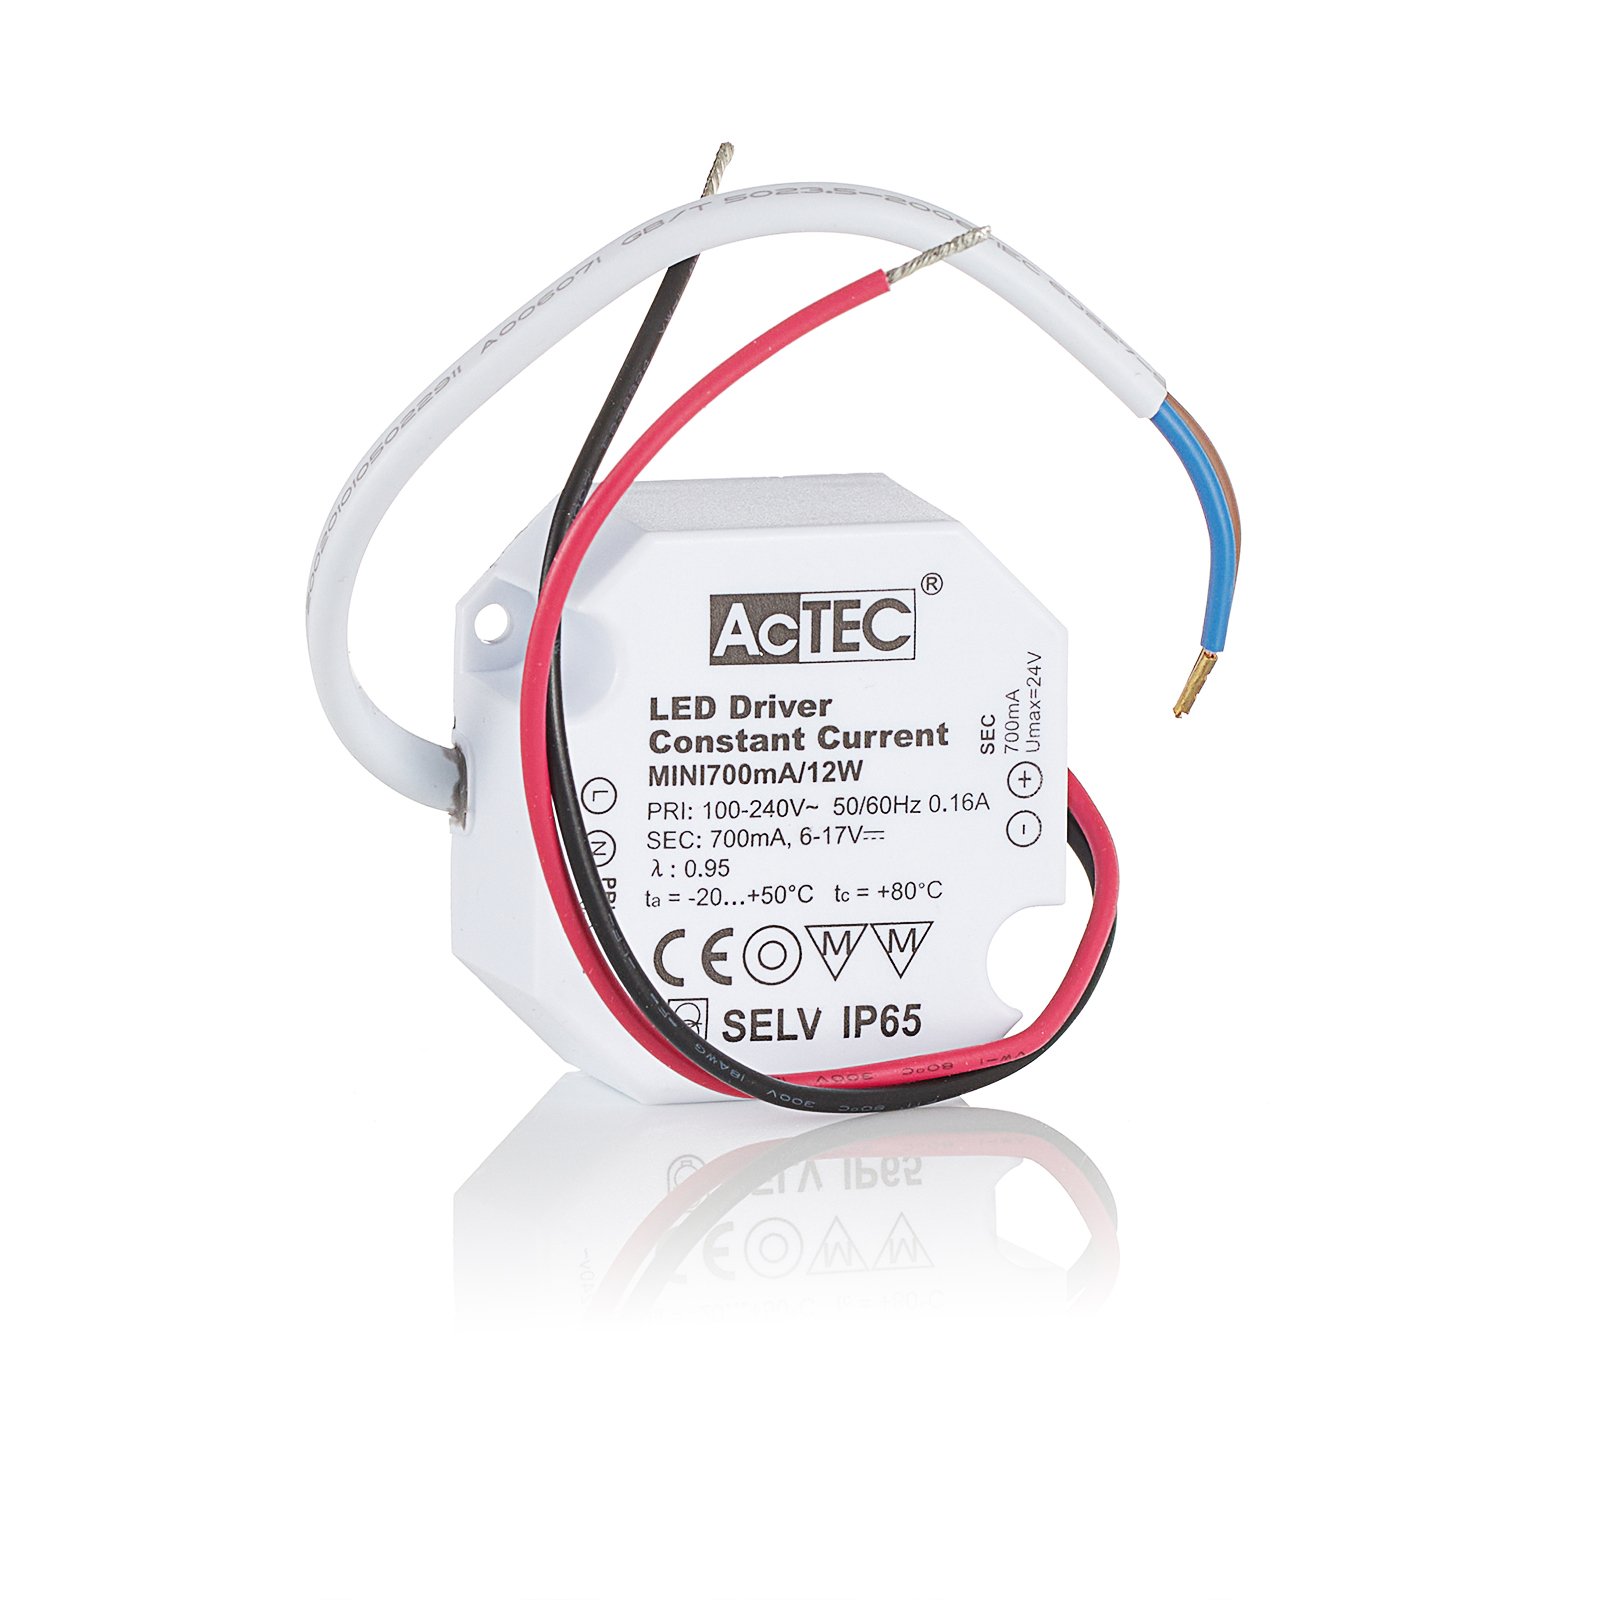 AcTEC Mini LED-driver CC 700mA, 12W, IP65